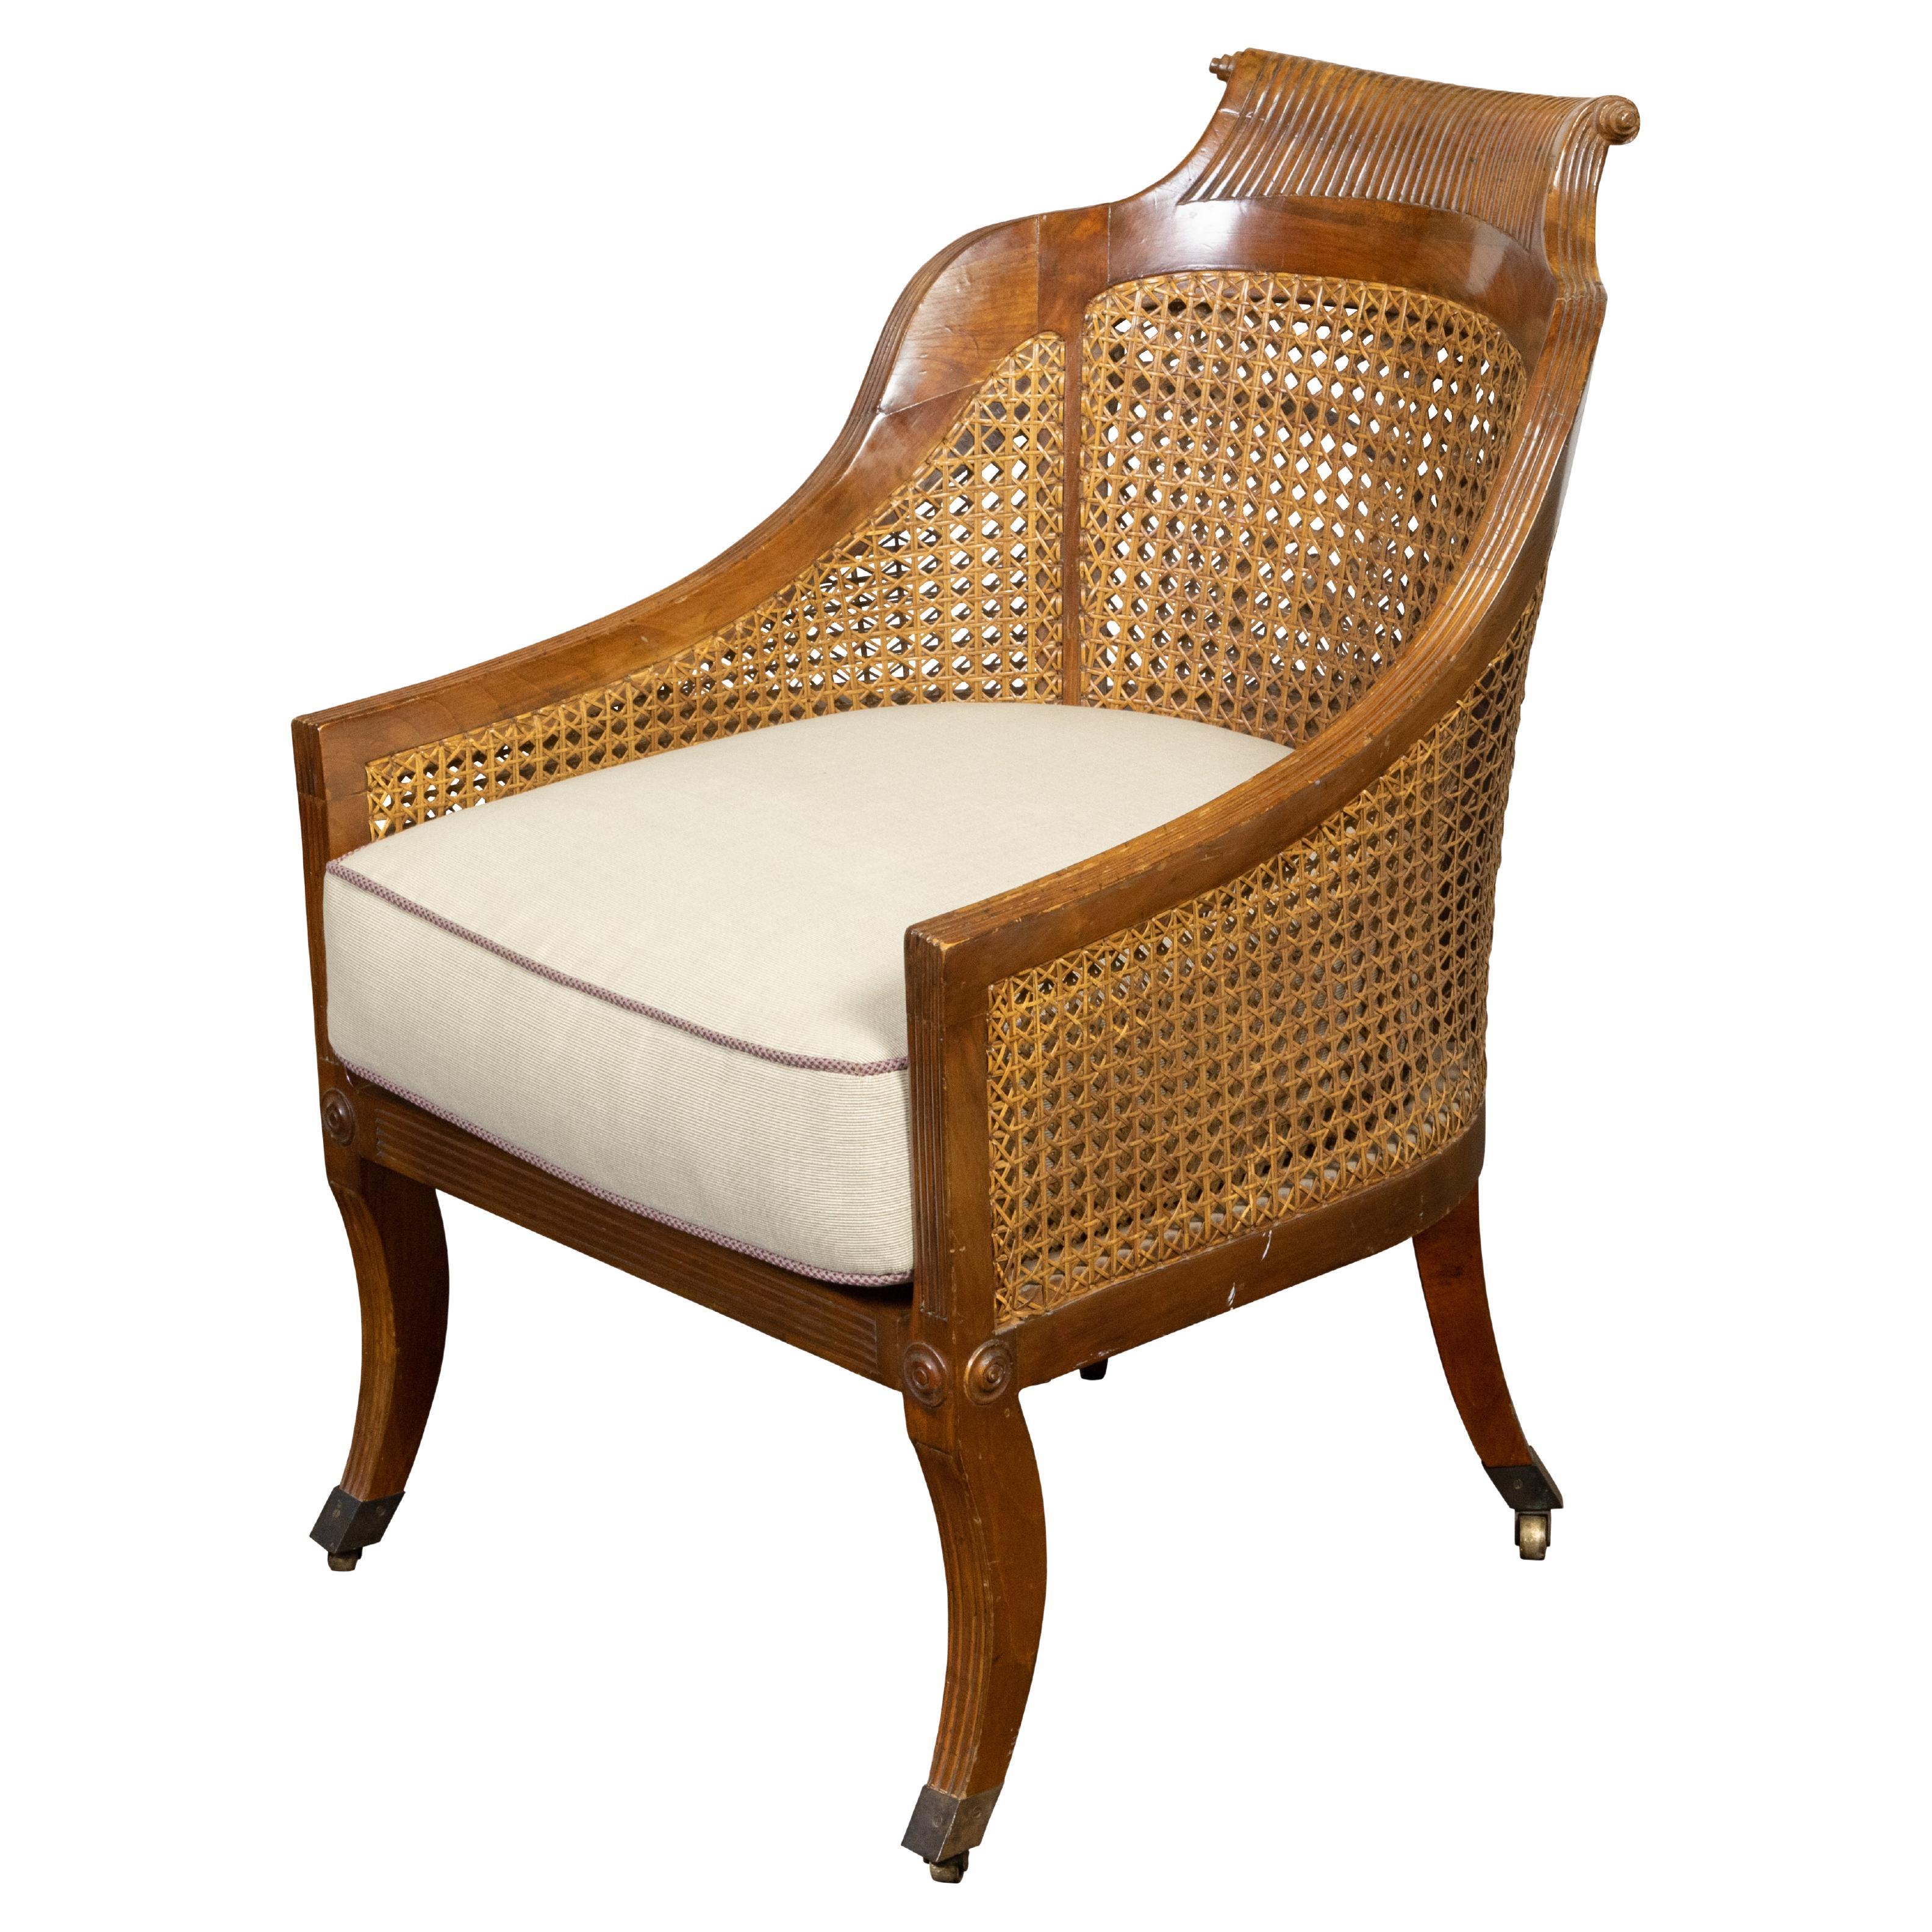 English Regency 19th Century Club Chair with Cane Back and Custom Cushion